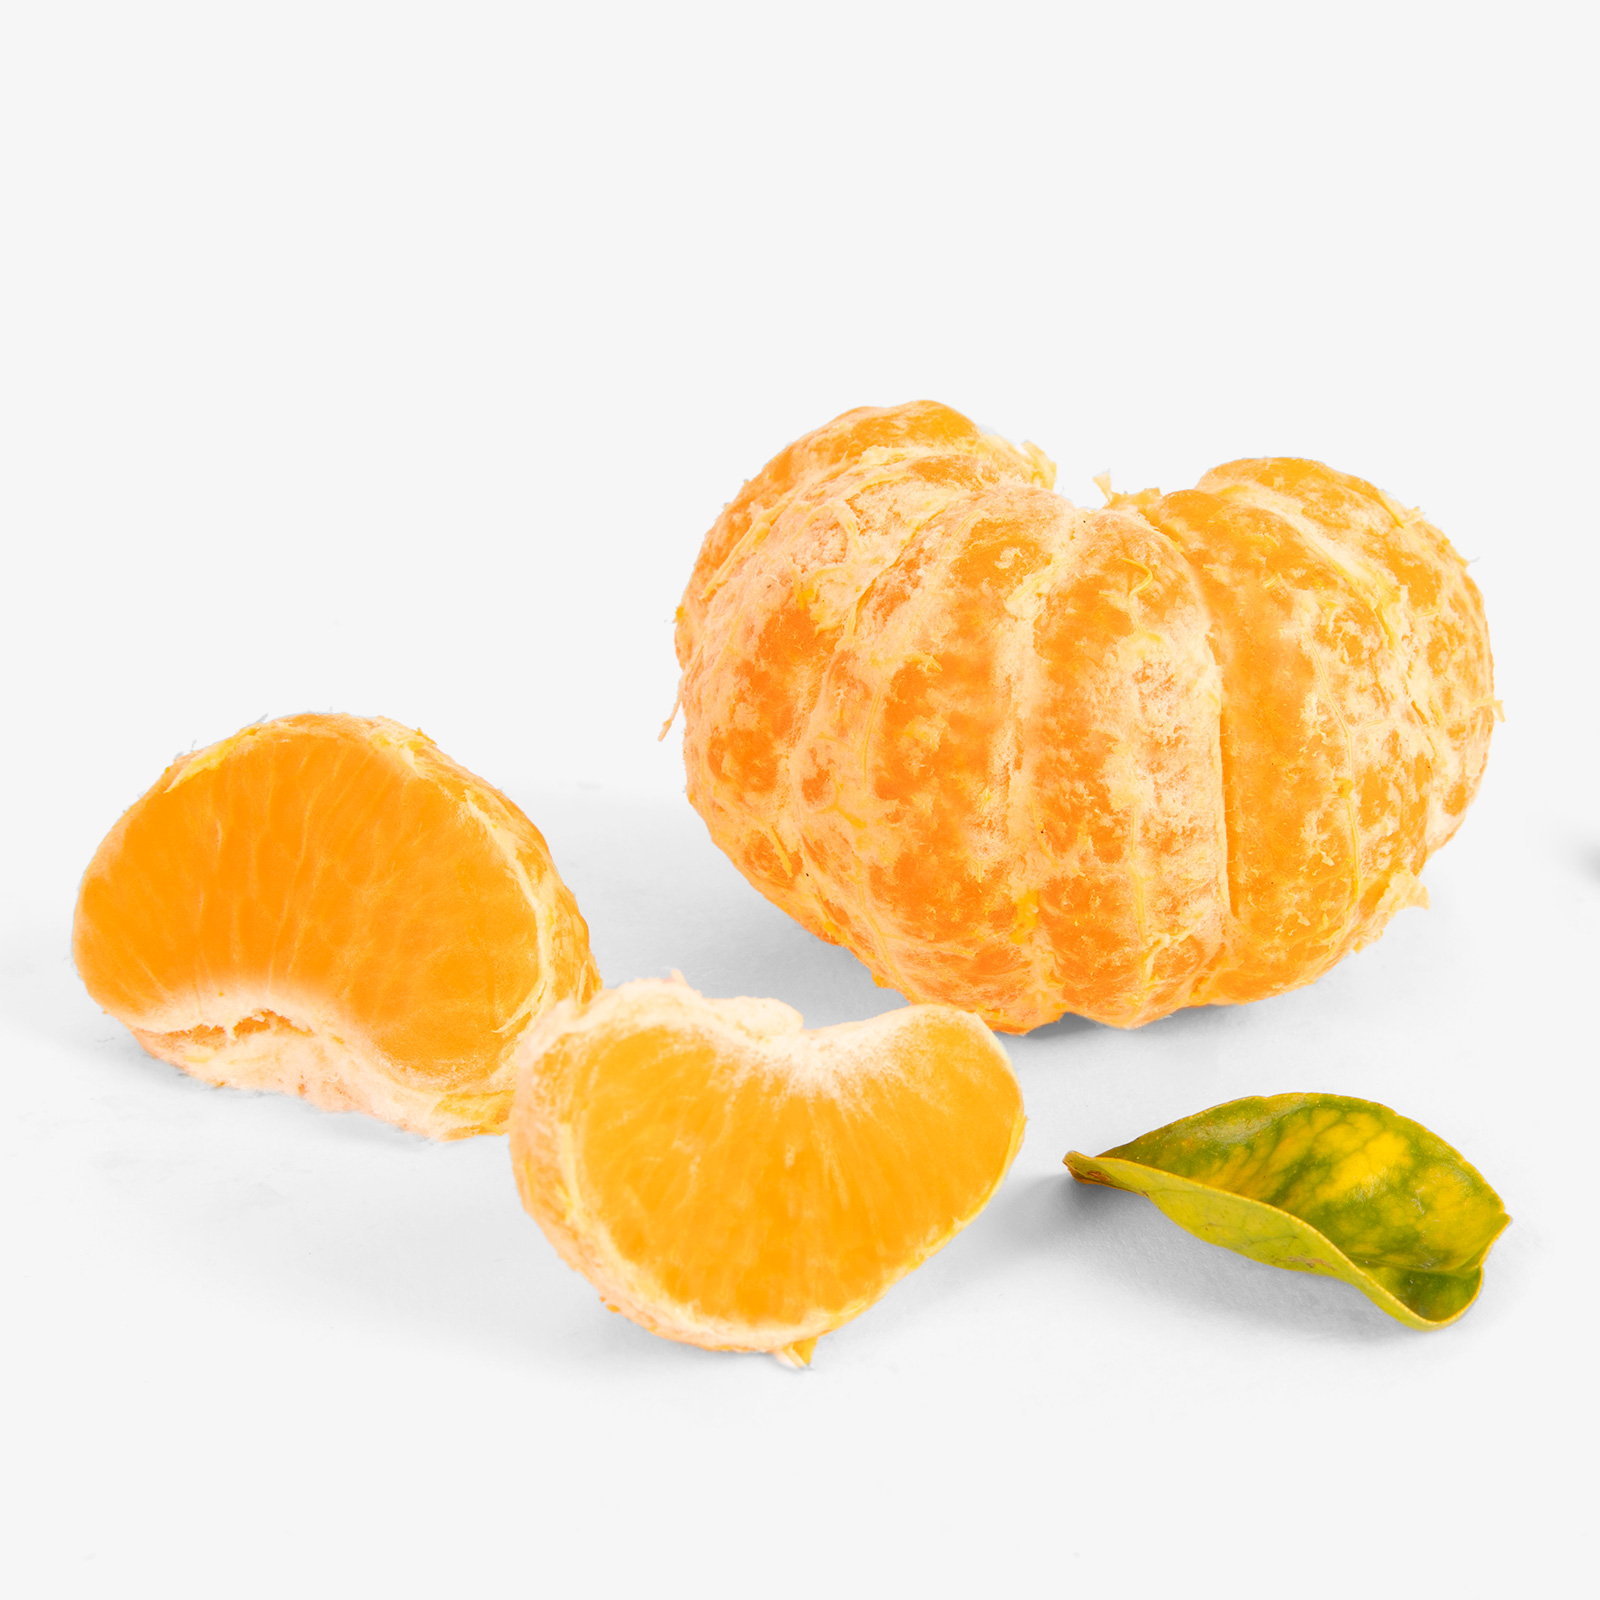 Comprar mandarinas afouerer o nadorcott online